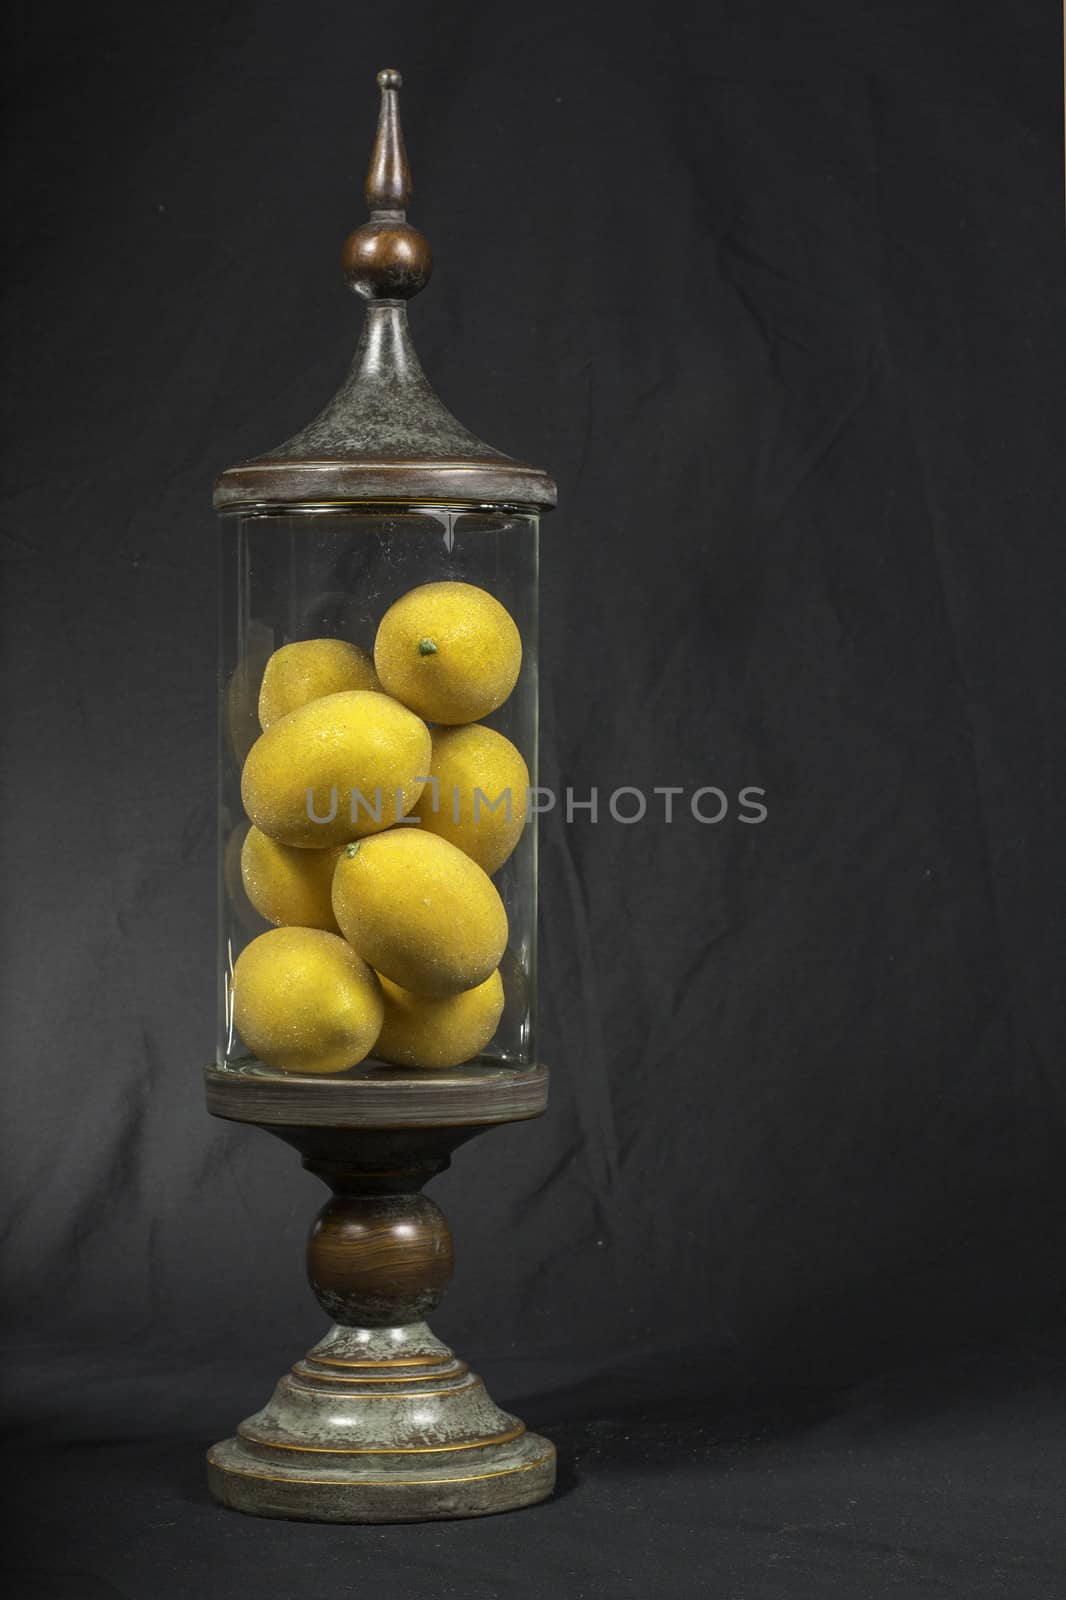 A decorative vintage glass jar filled with lemons.